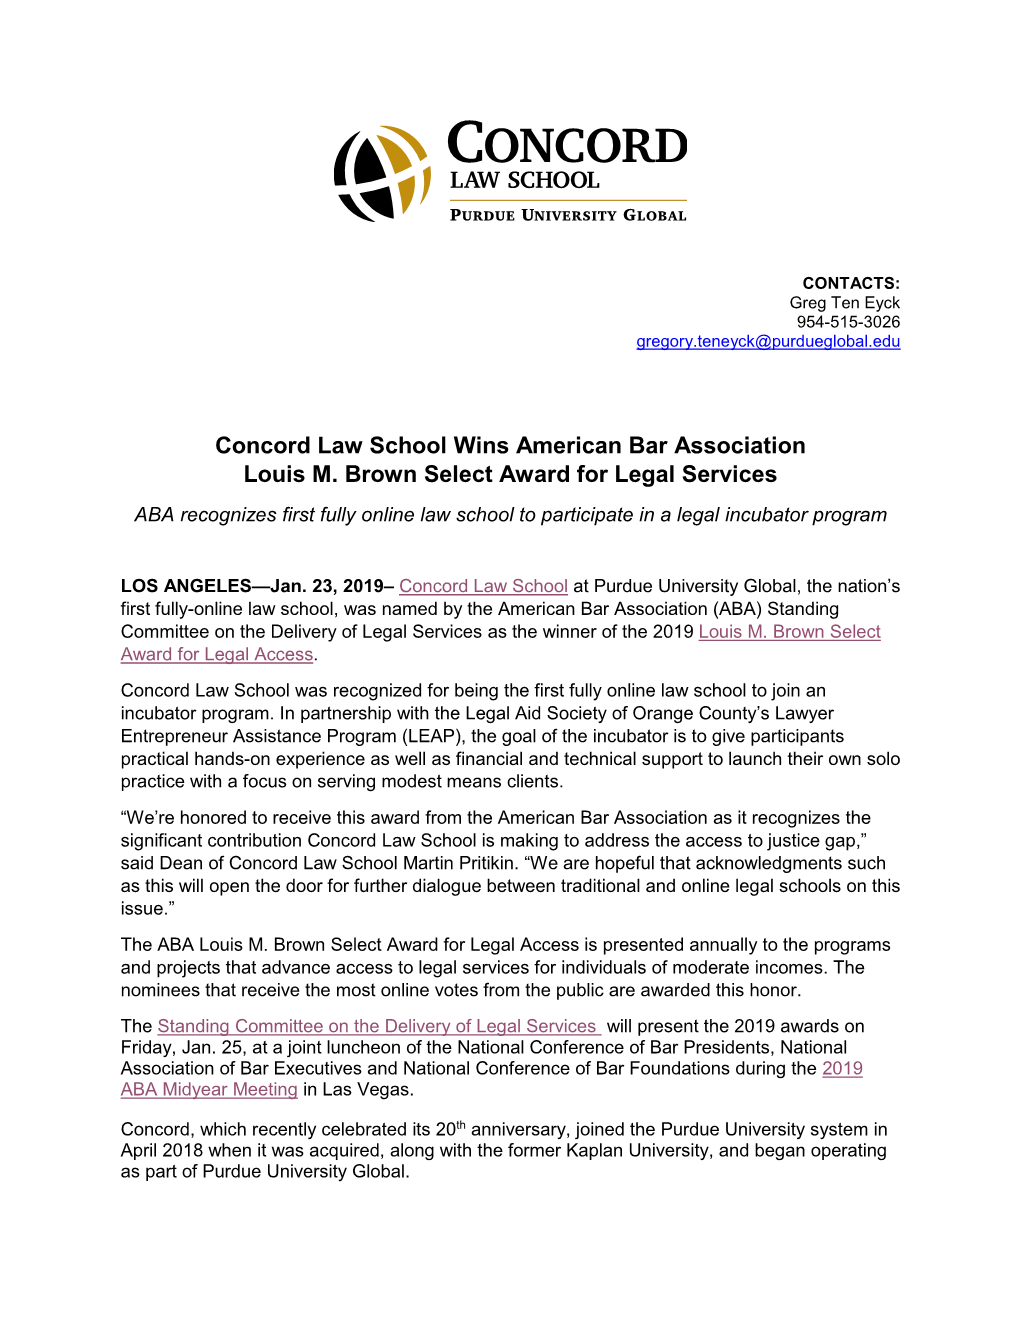 Concord Law School Wins American Bar Association Louis M. Brown